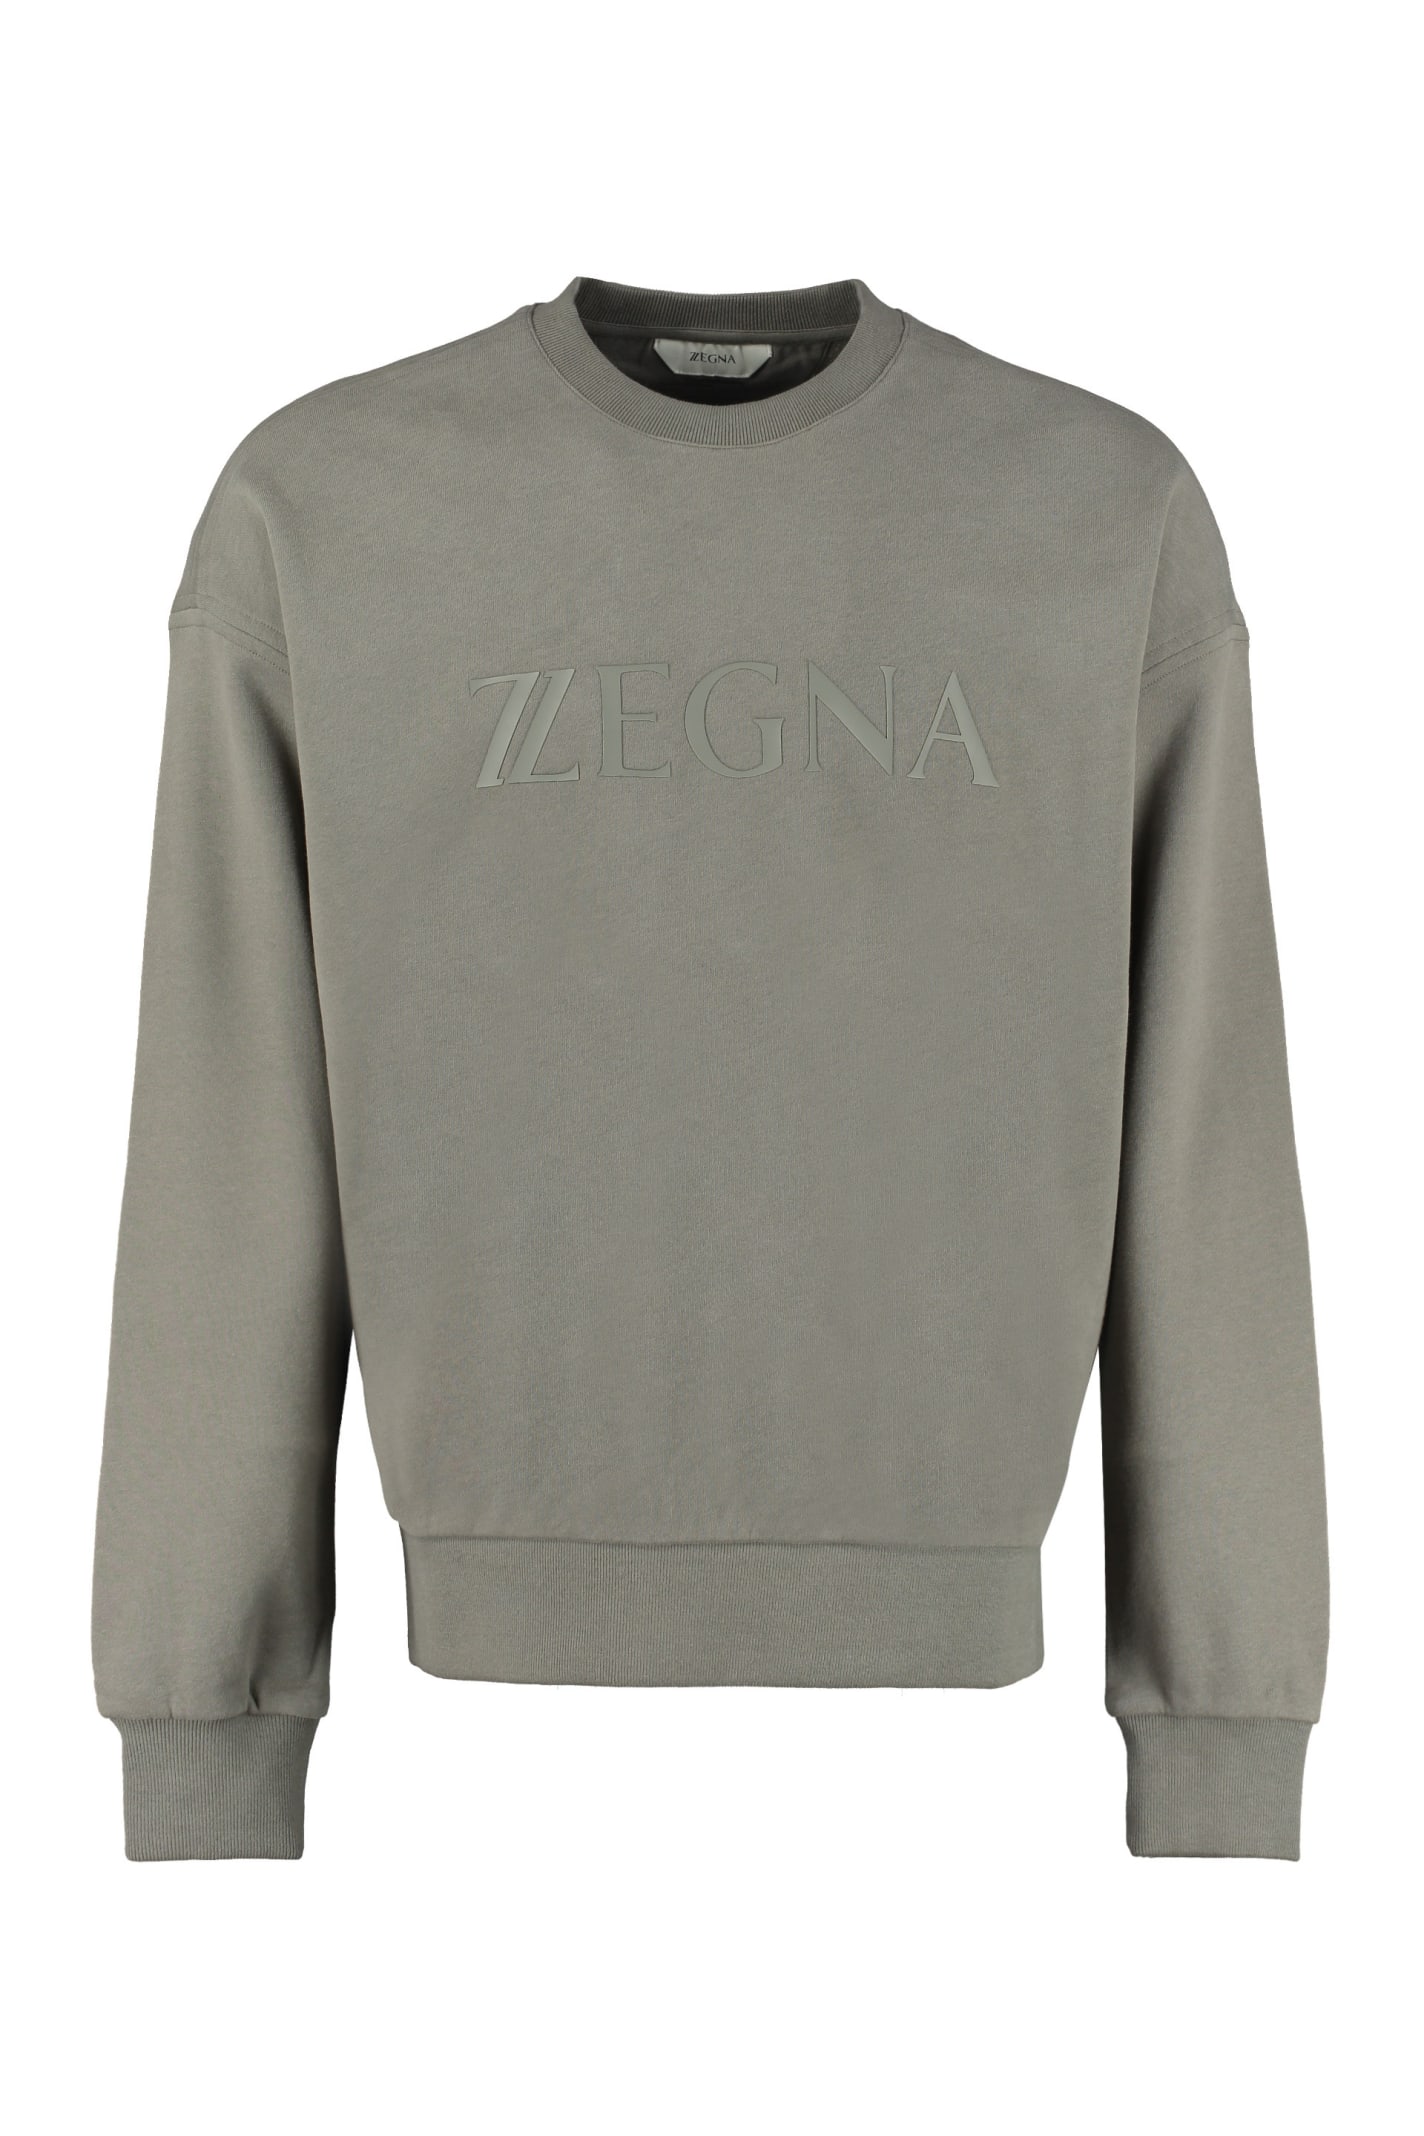 Z Zegna Cotton Crew-neck Sweatshirt